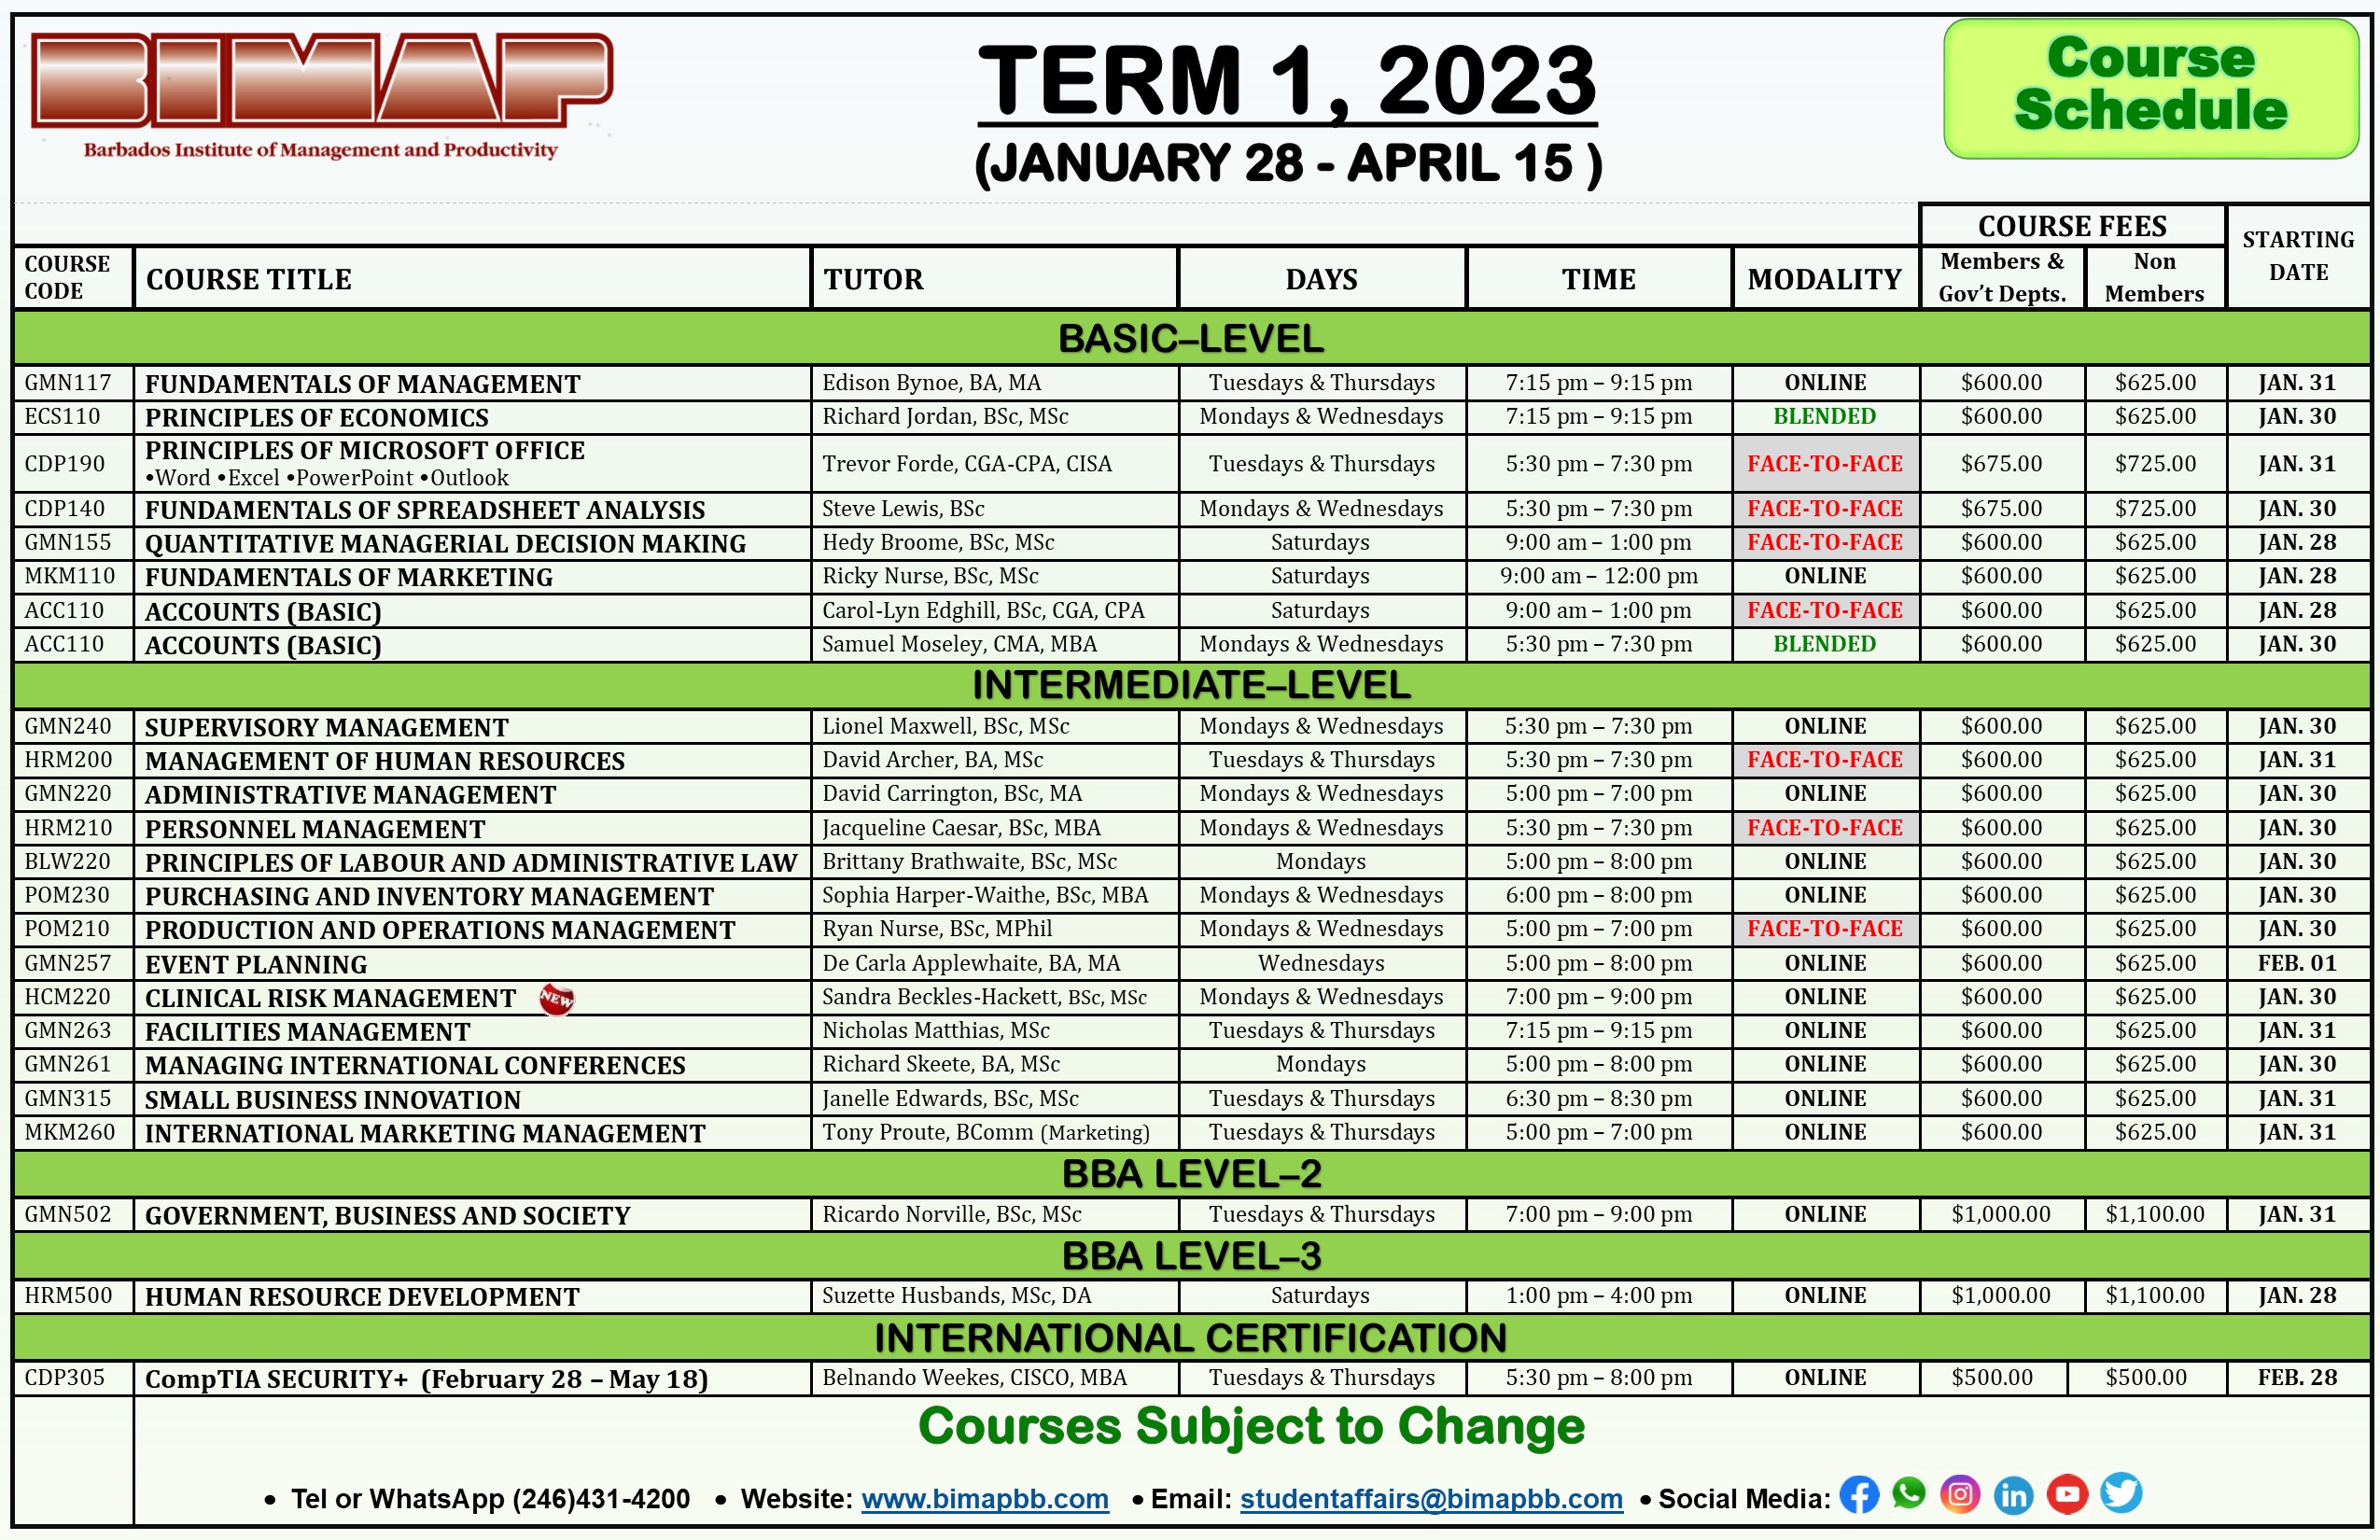 Term 1, 2023 Schedule